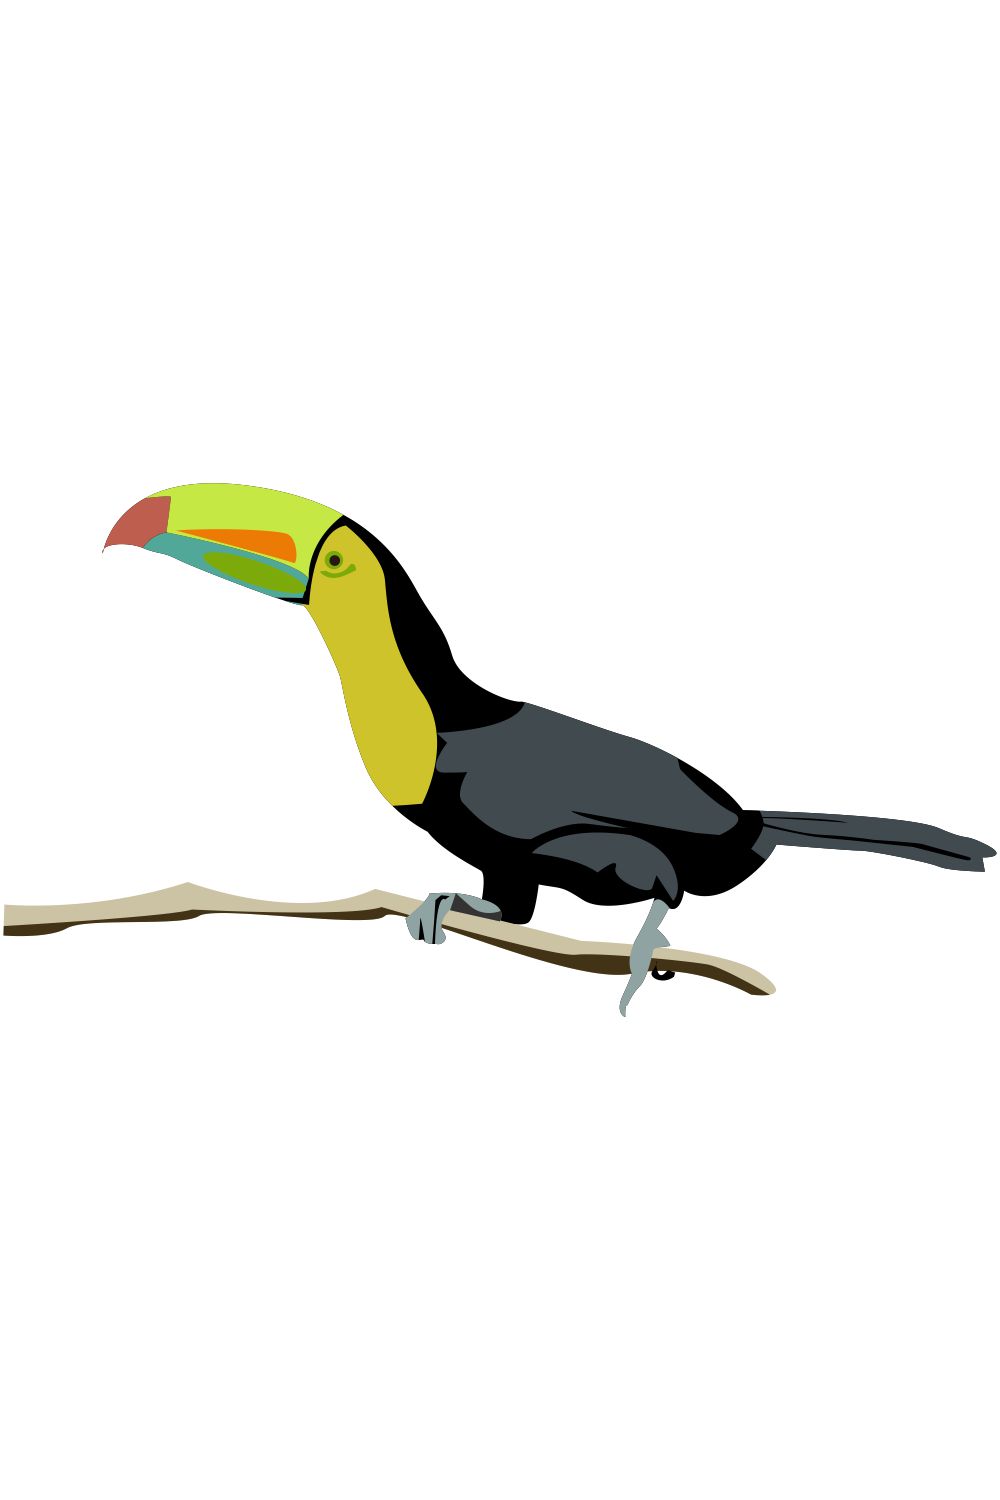 toucan bird graphic vector pinterest preview image.